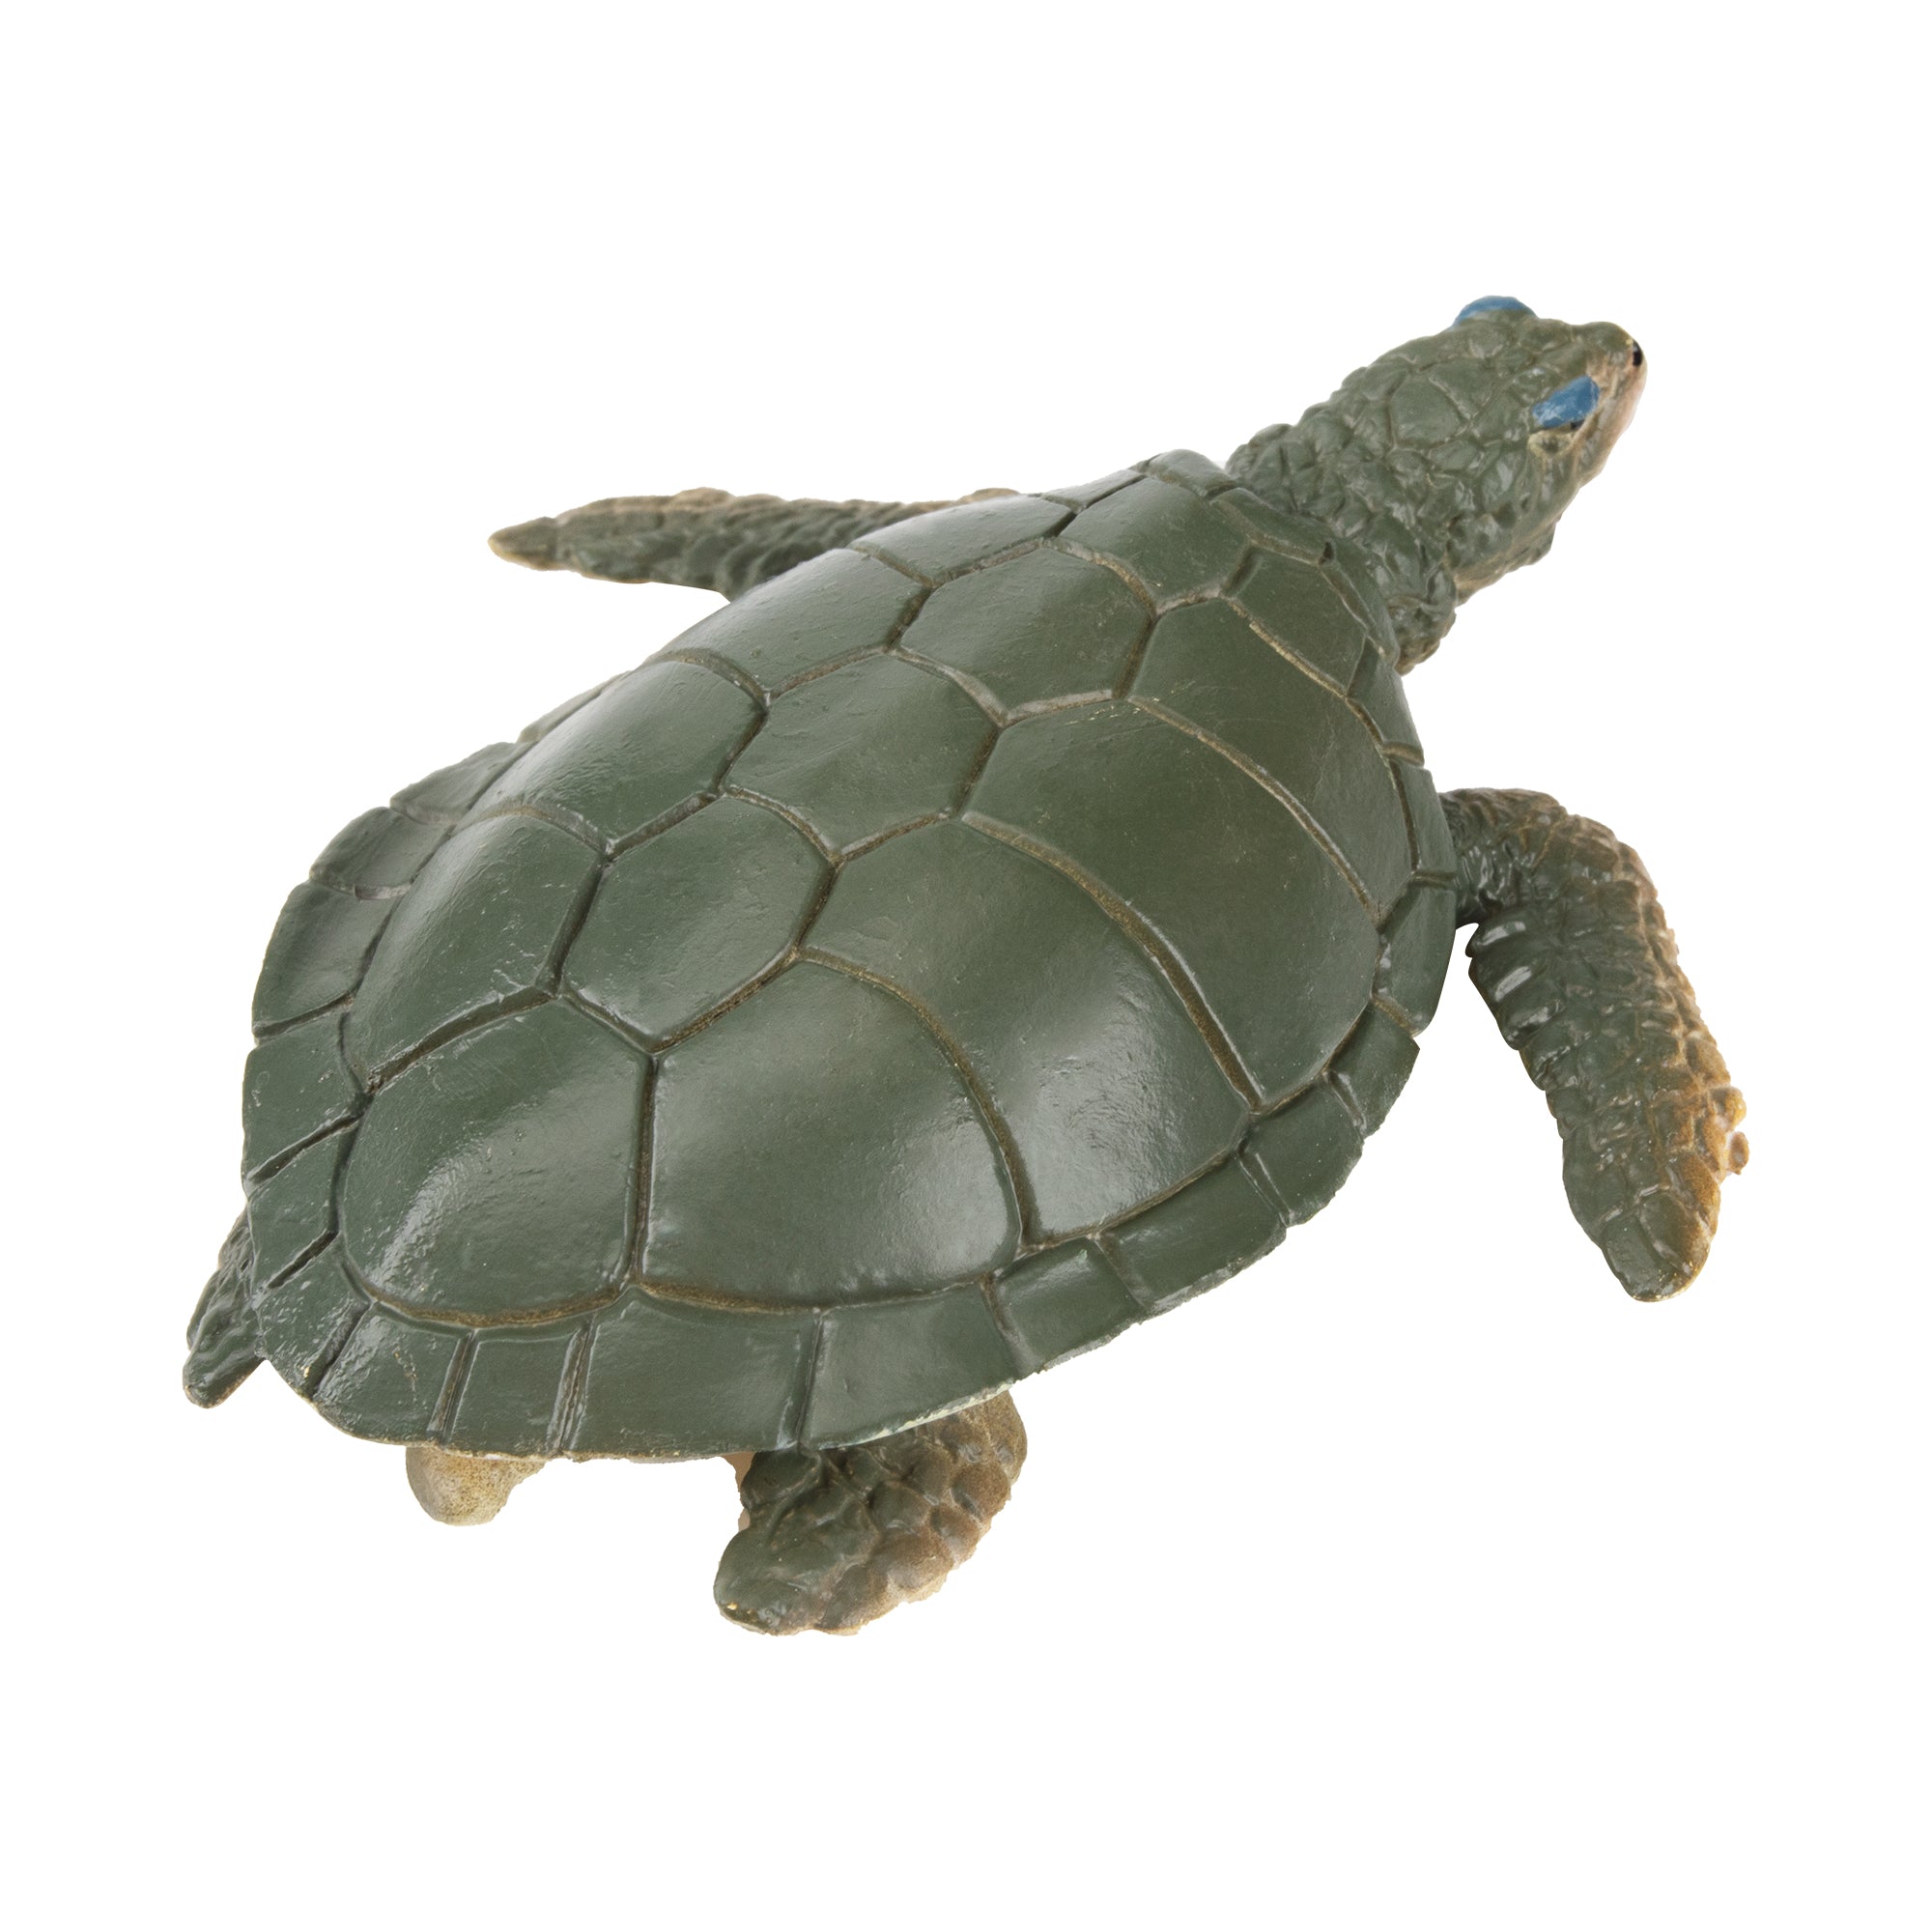 Toymany Walking Kemp's Ridley Sea Turtle Figurine Toy-back